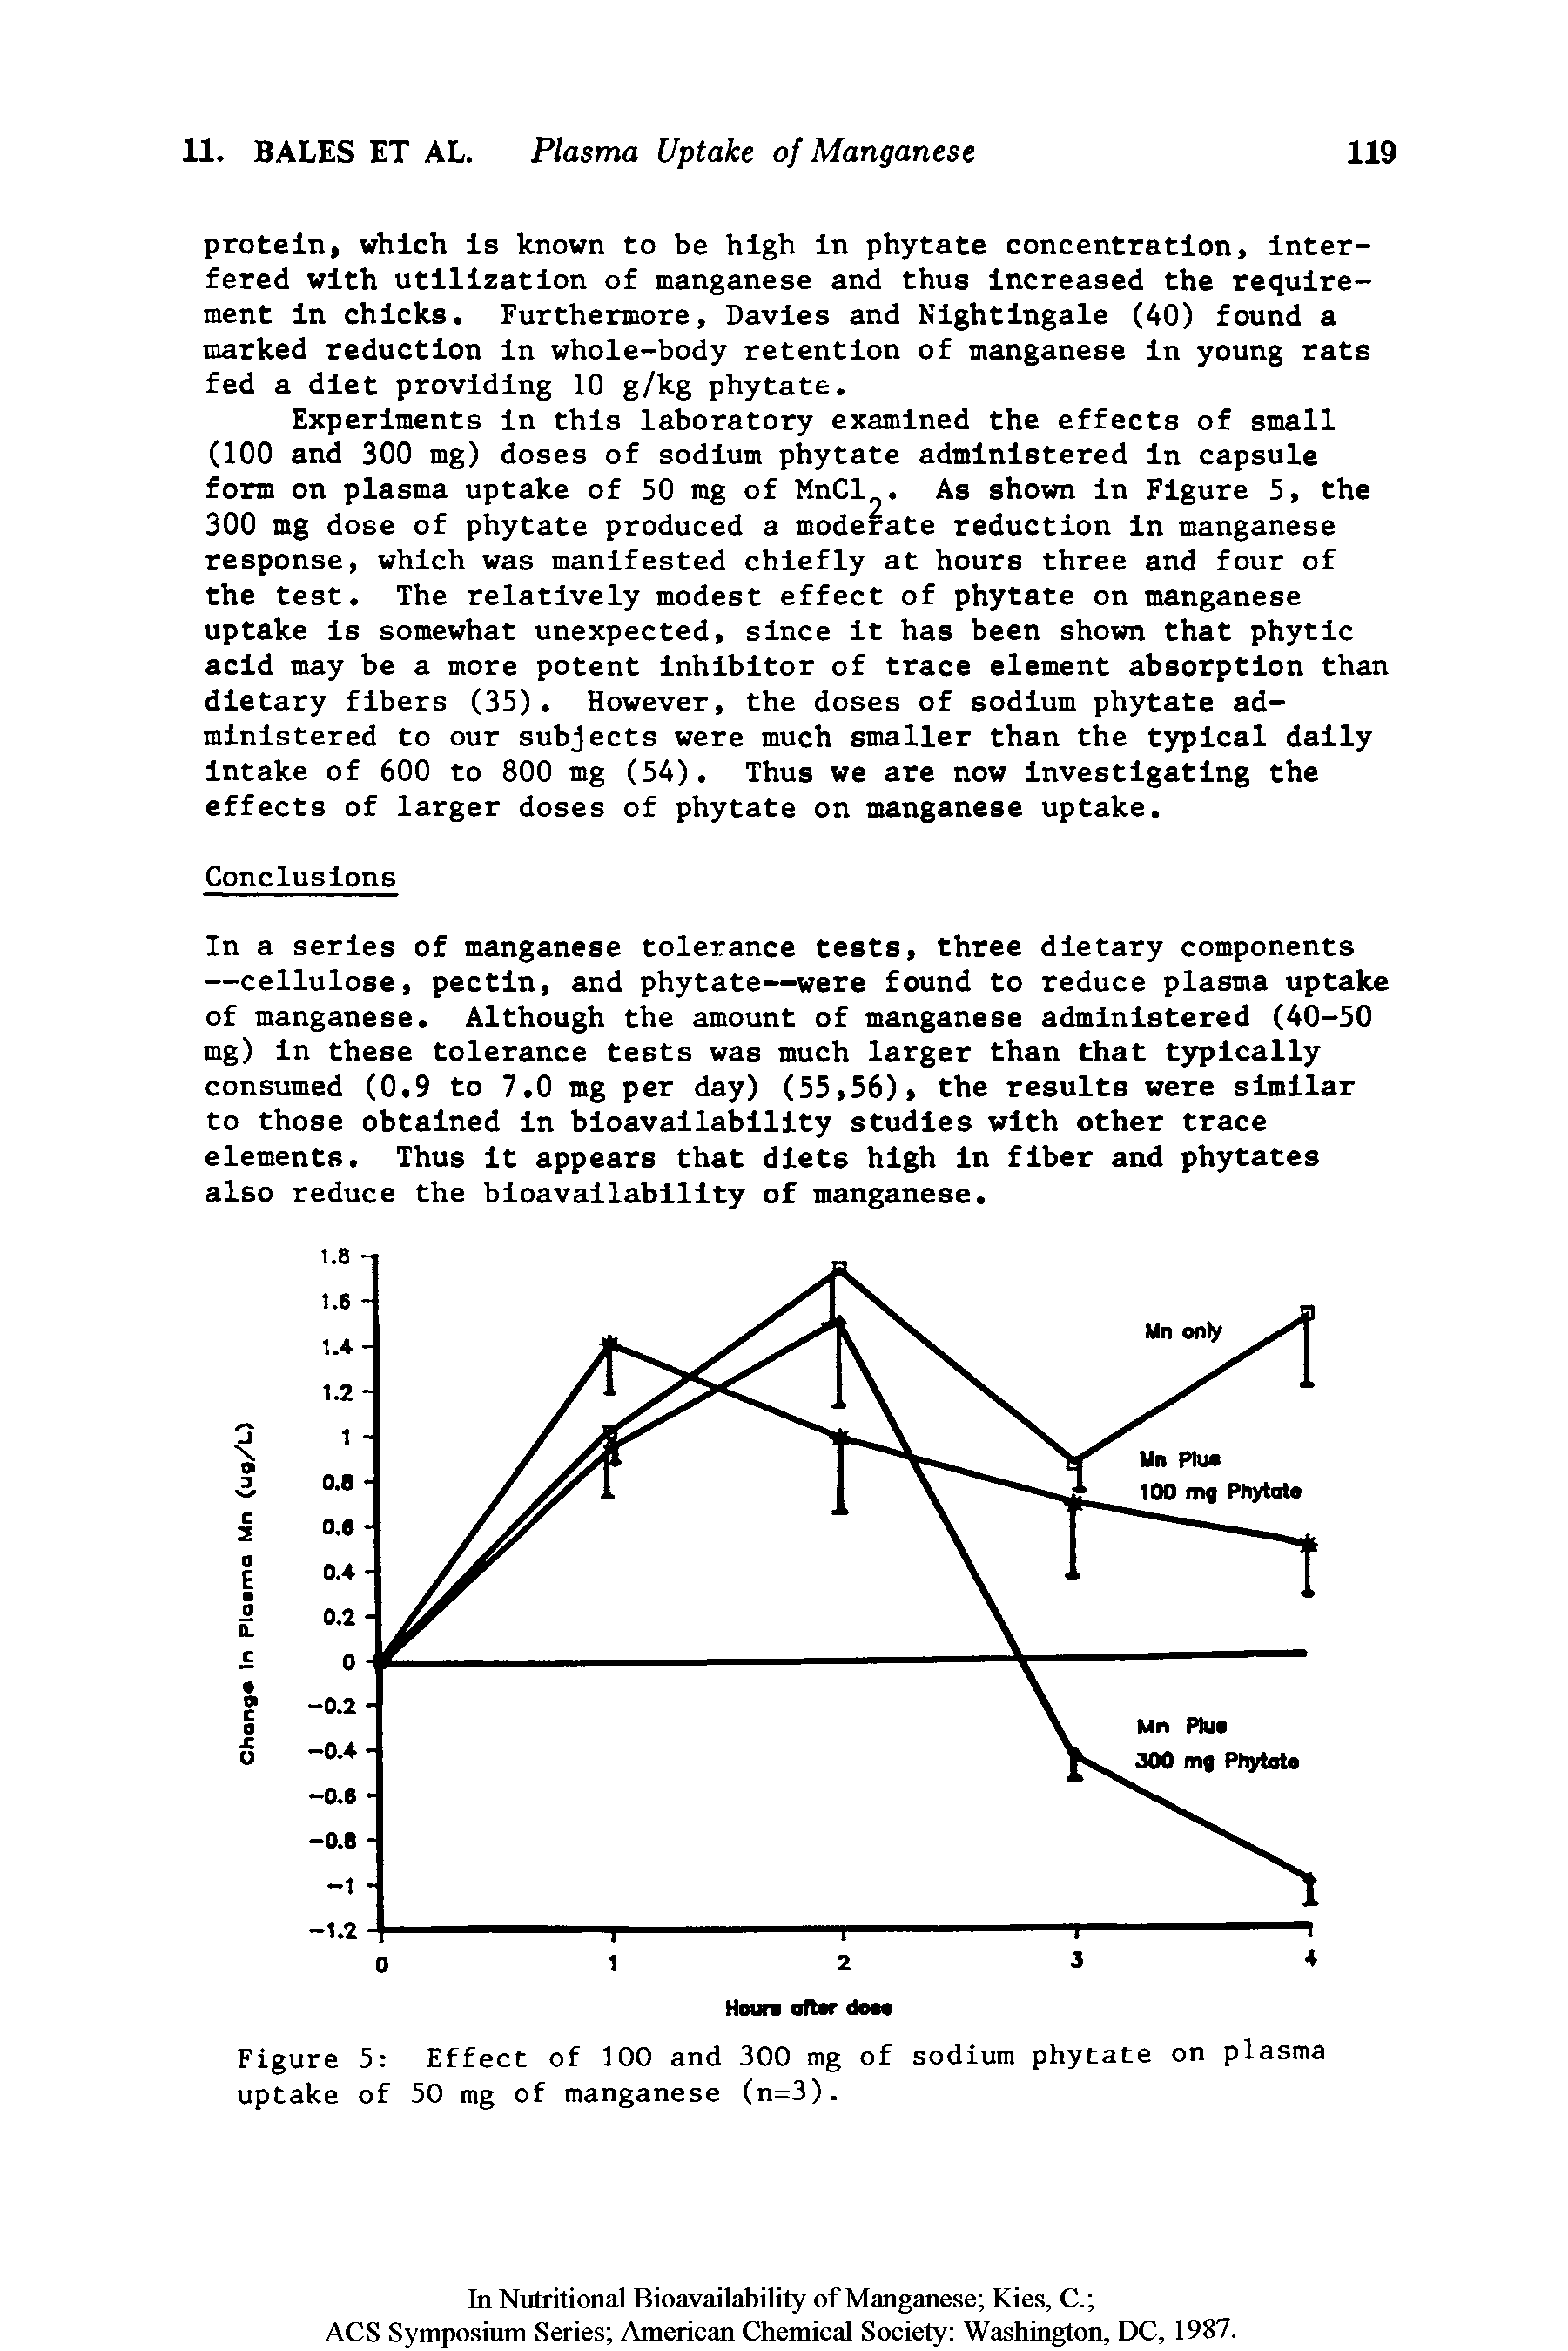 Figure 5 Effect of 100 and 300 mg of sodium phytate on plasma uptake of 50 mg of manganese (n=3).